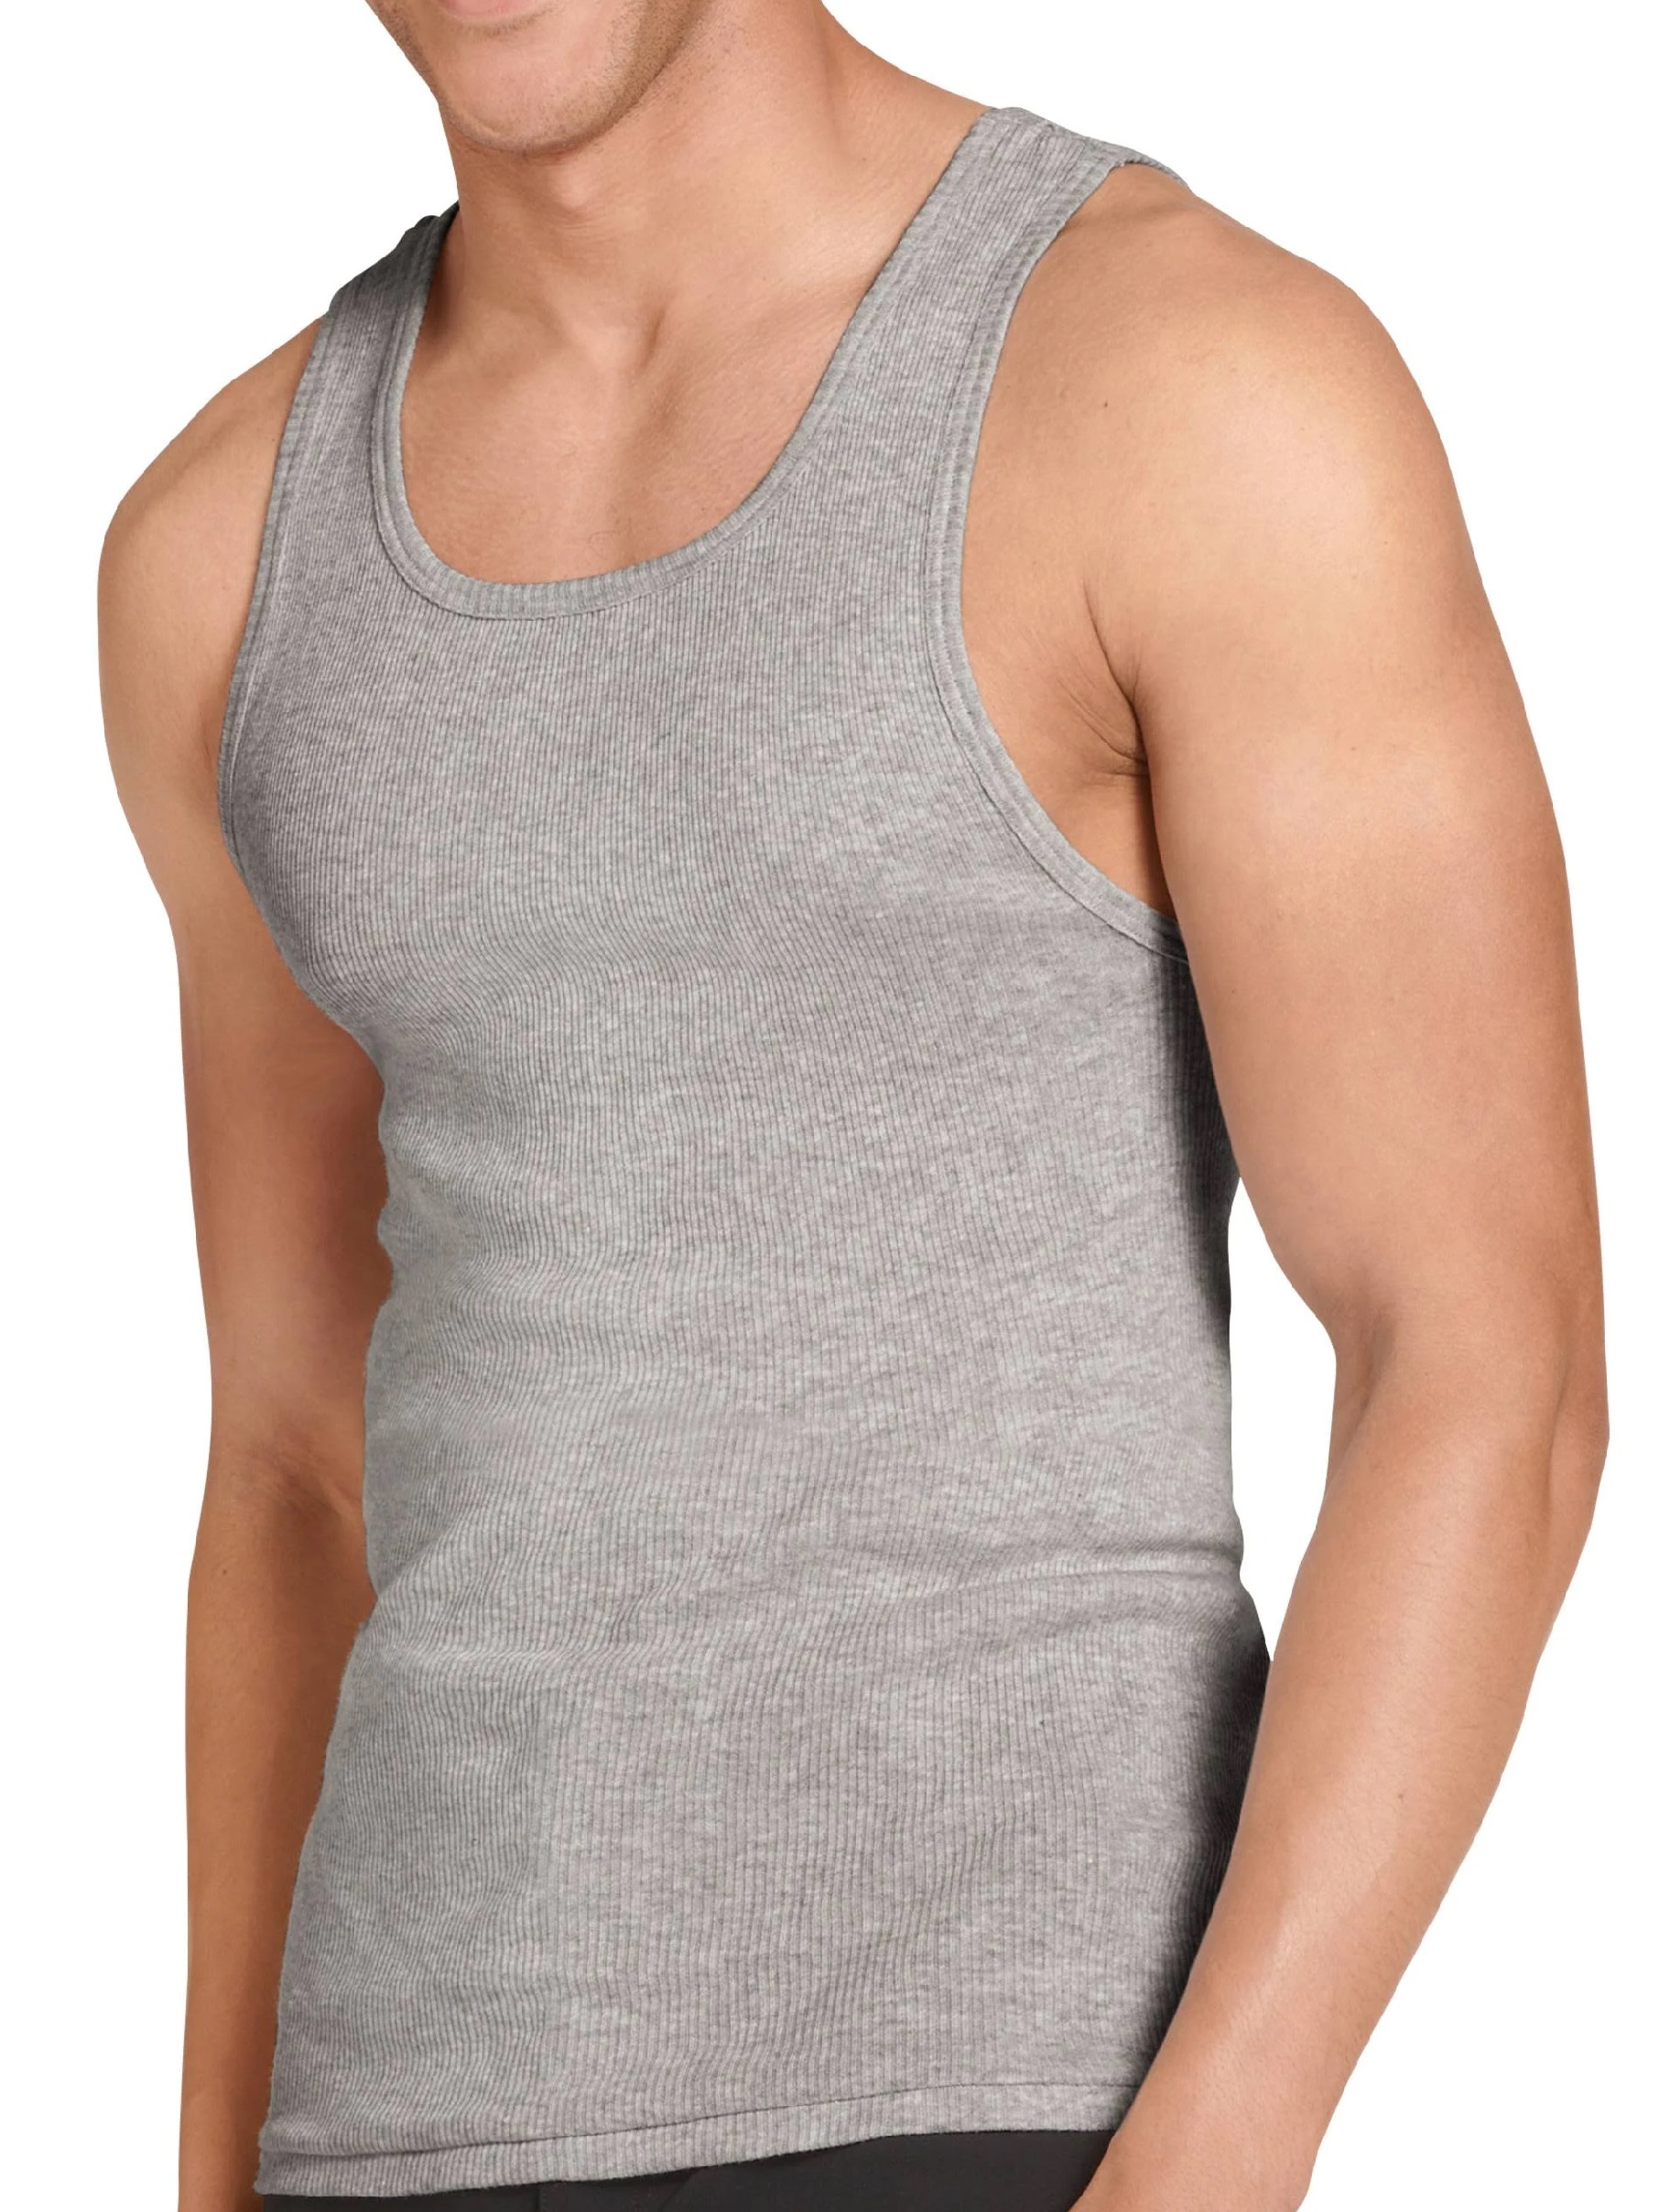 Gelante 6-Pack Cotton Adult Men's Basic Undershirt Tank Top Athletic Sleeveless Tee - image 2 of 5